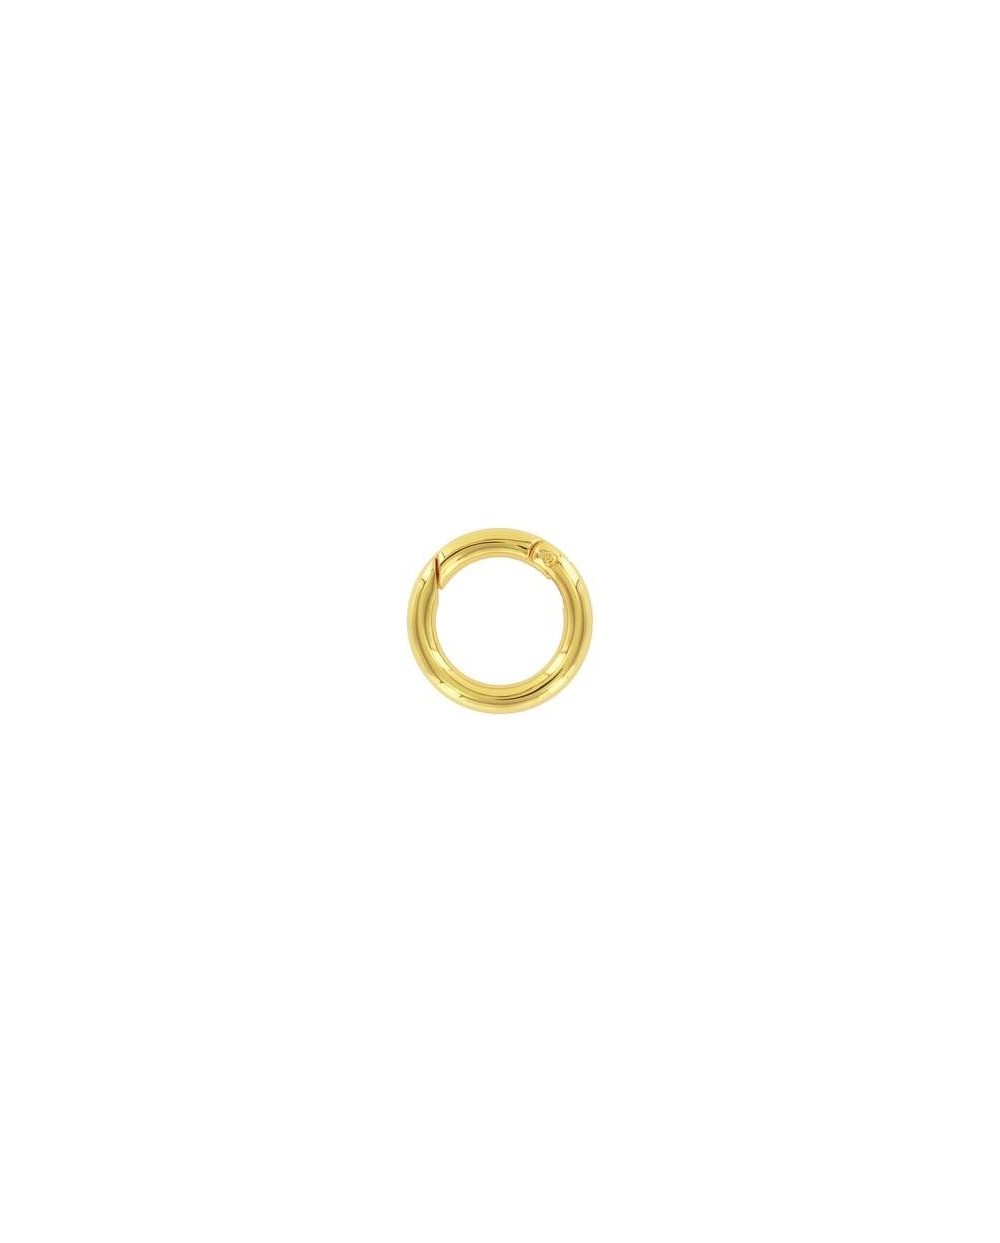 Užsegimas žiedas aukso sp., 24mm, 1 vnt.